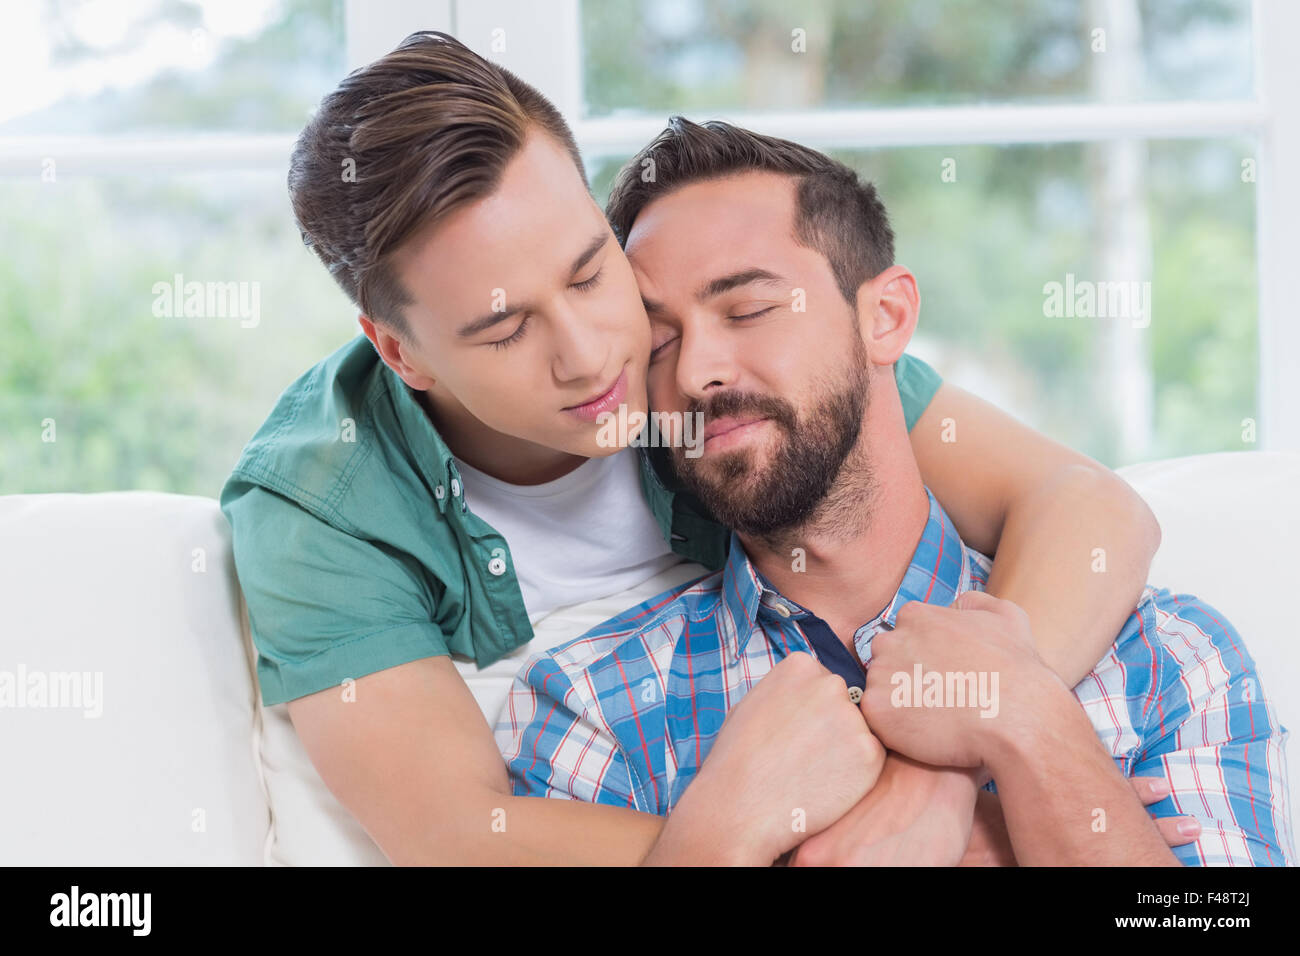 pareja-homosexual-hombres-abrazarse-mutuamente-f48t2j.jpg